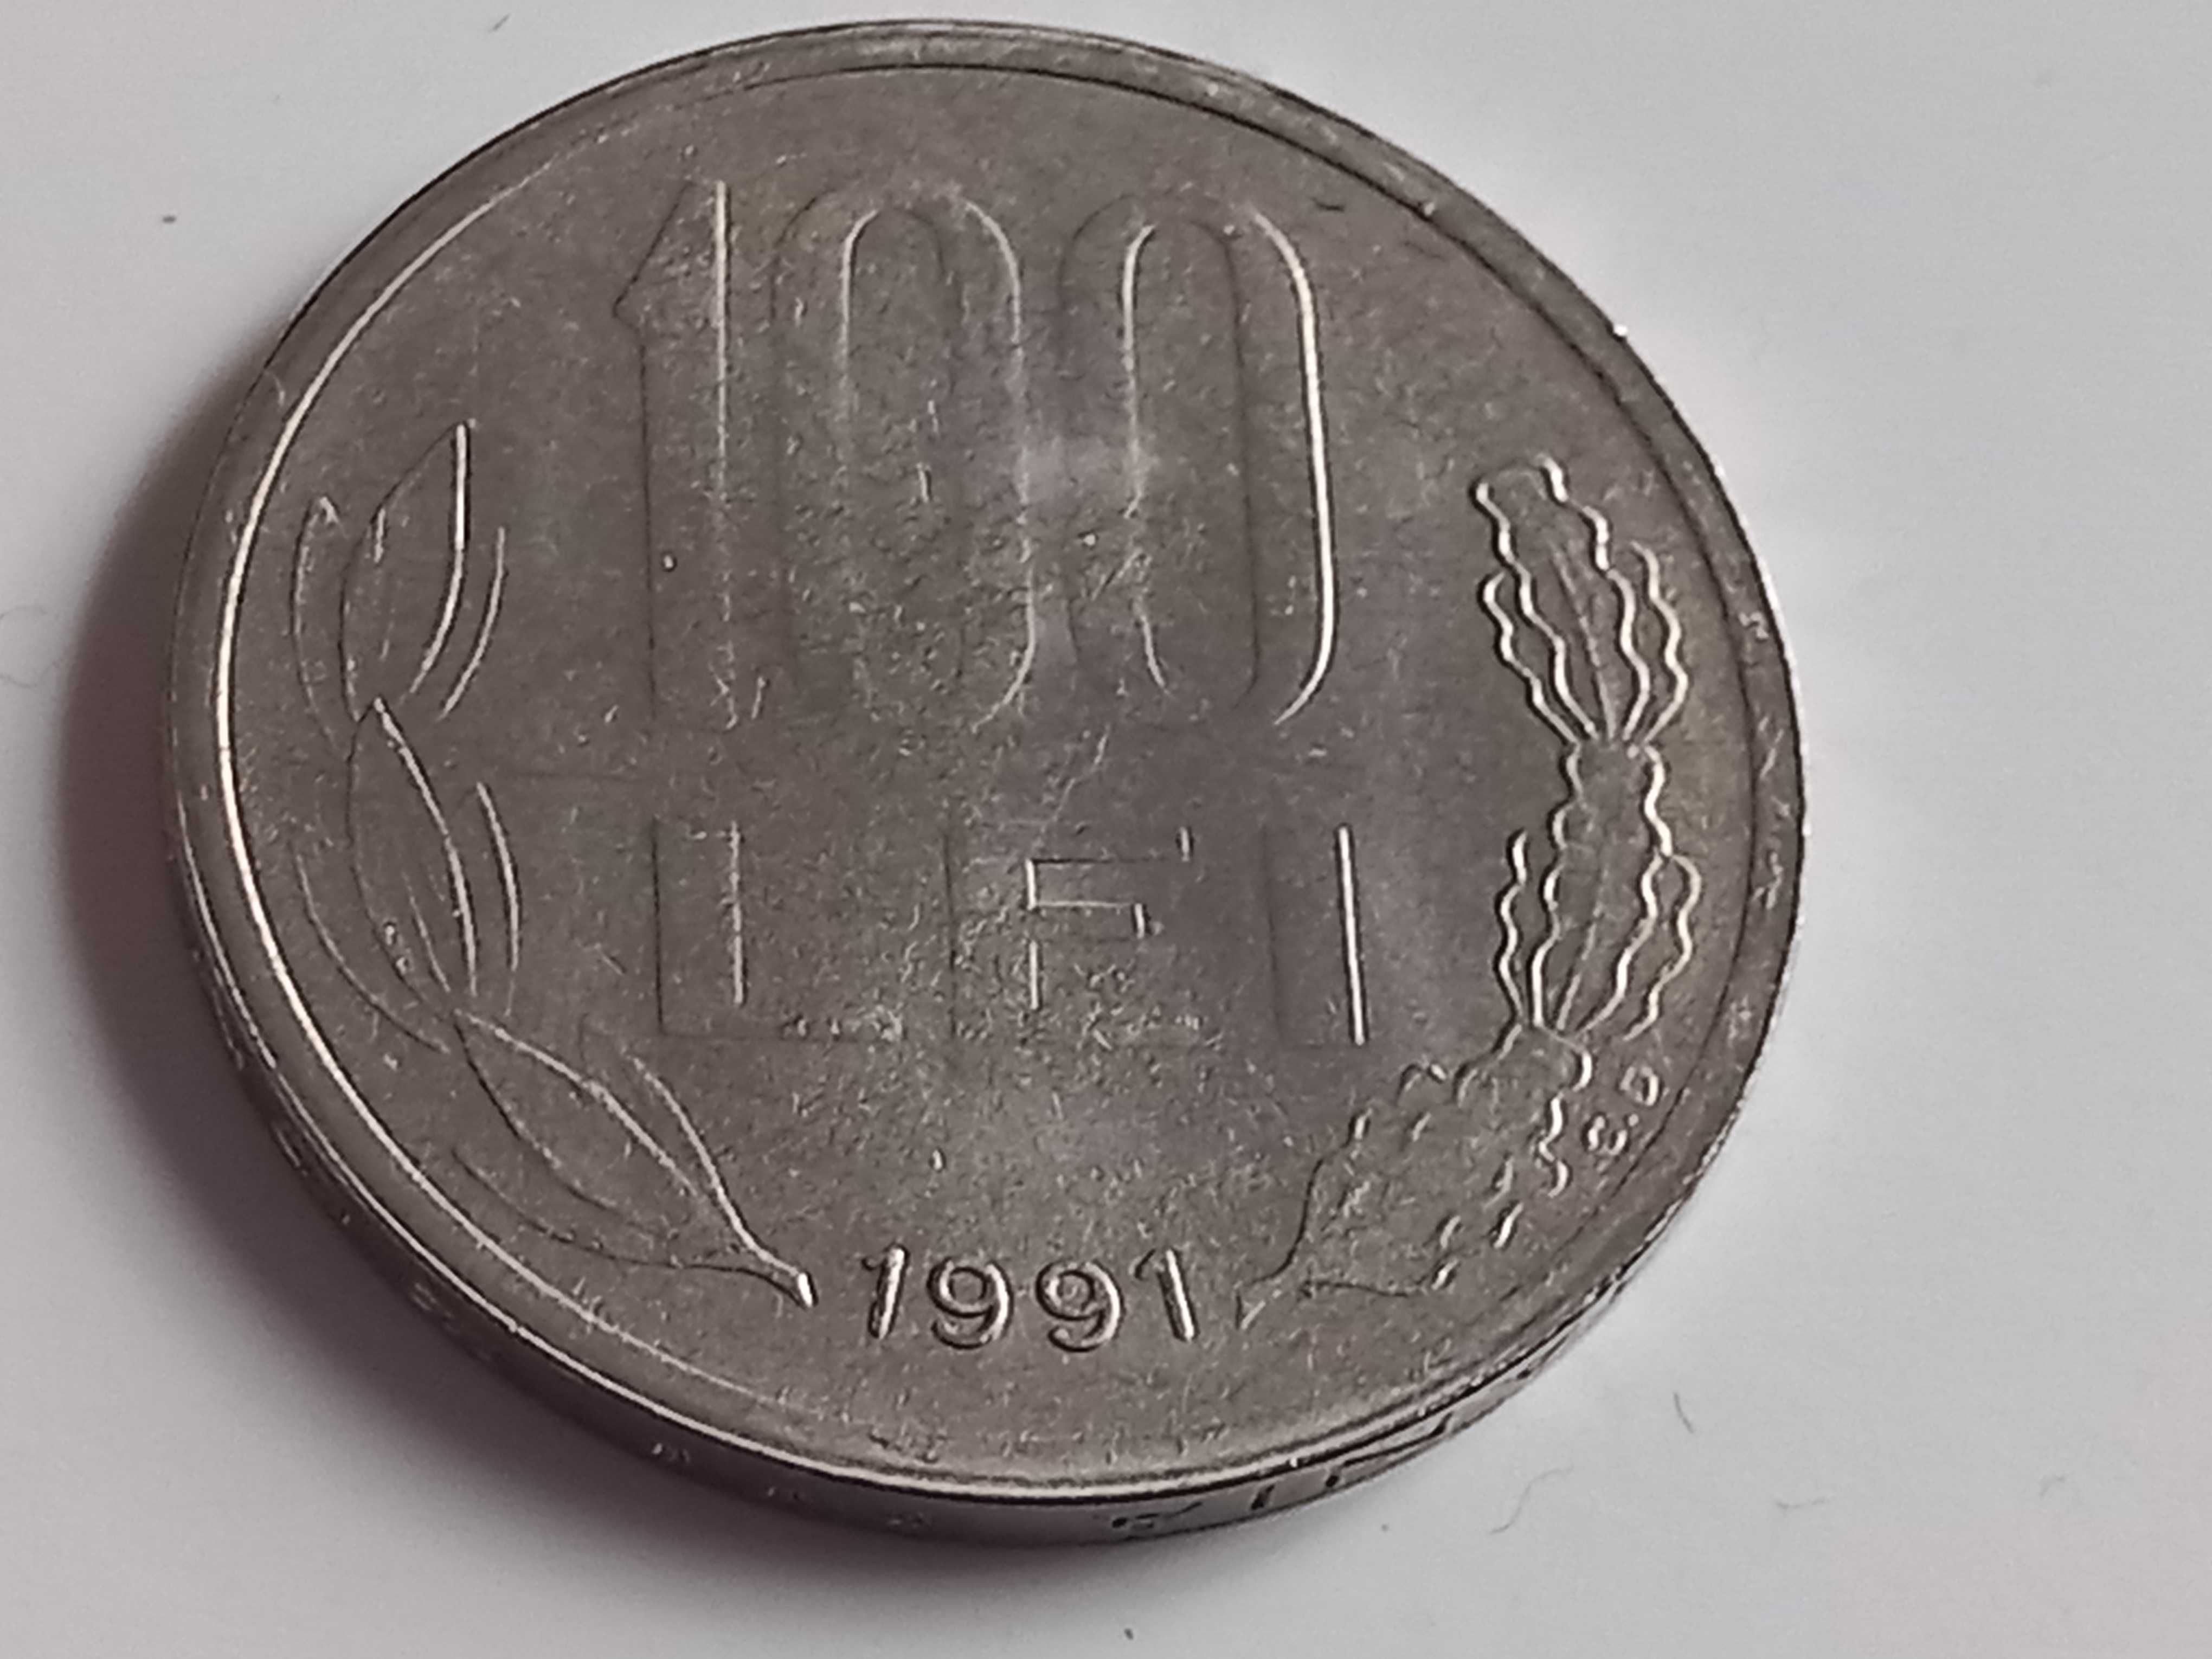 Romania , 100 lei 1991 varianta cu 99 rotund